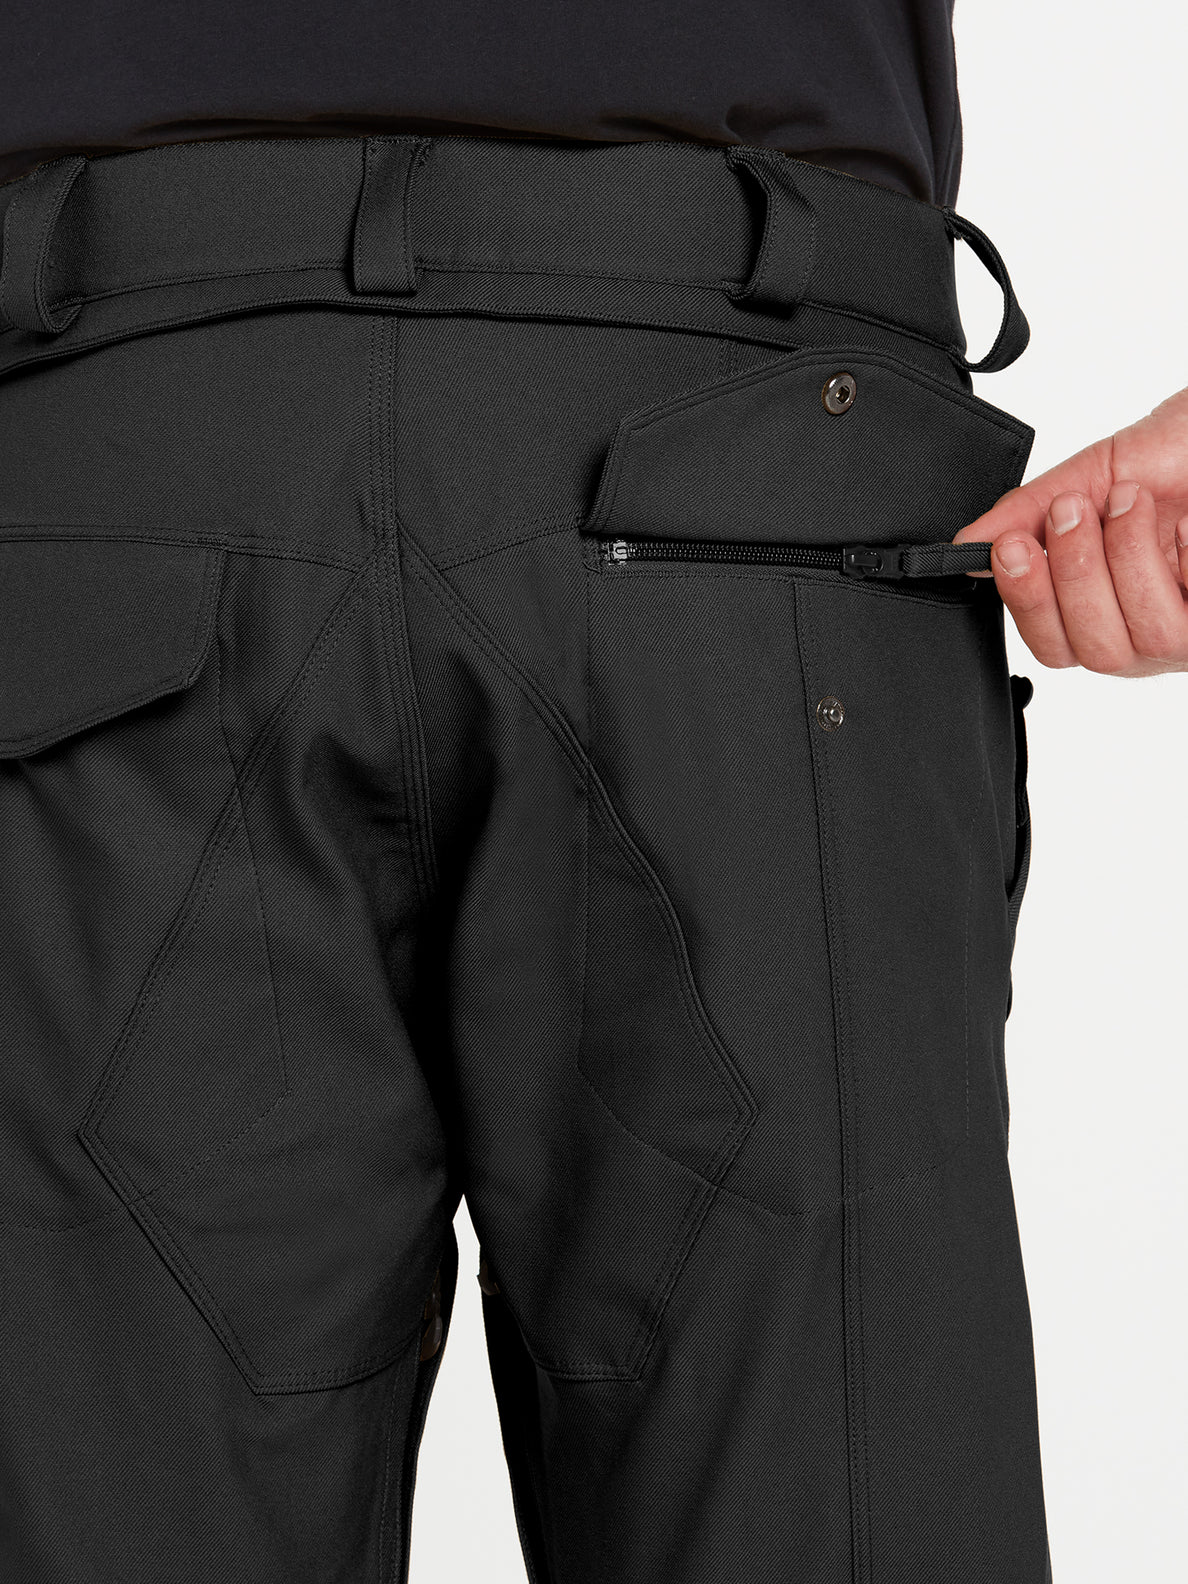 Nuovi pantaloni articolati - NERO (G1352211_BLK) [8]